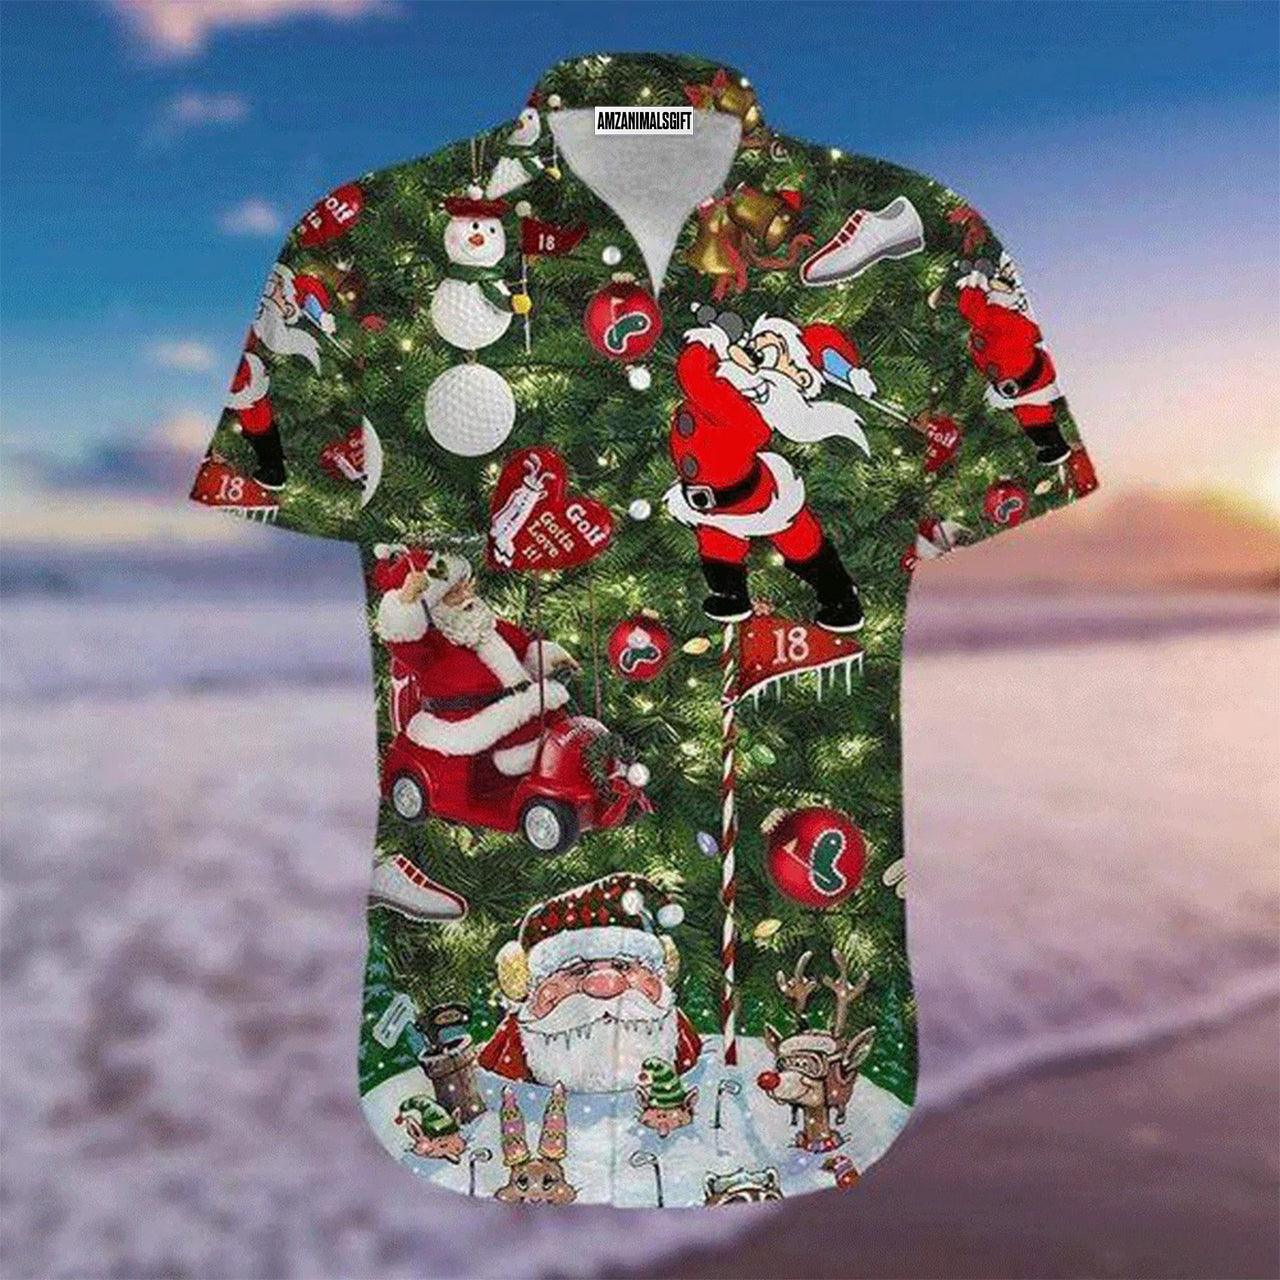 Golf Hawaiian Shirt, Golf Christmas Santa Claus Snowman Green Aloha Hawaiian Shirts For Men and Women - Gift For Golfer, Friend, Family - Amzanimalsgift